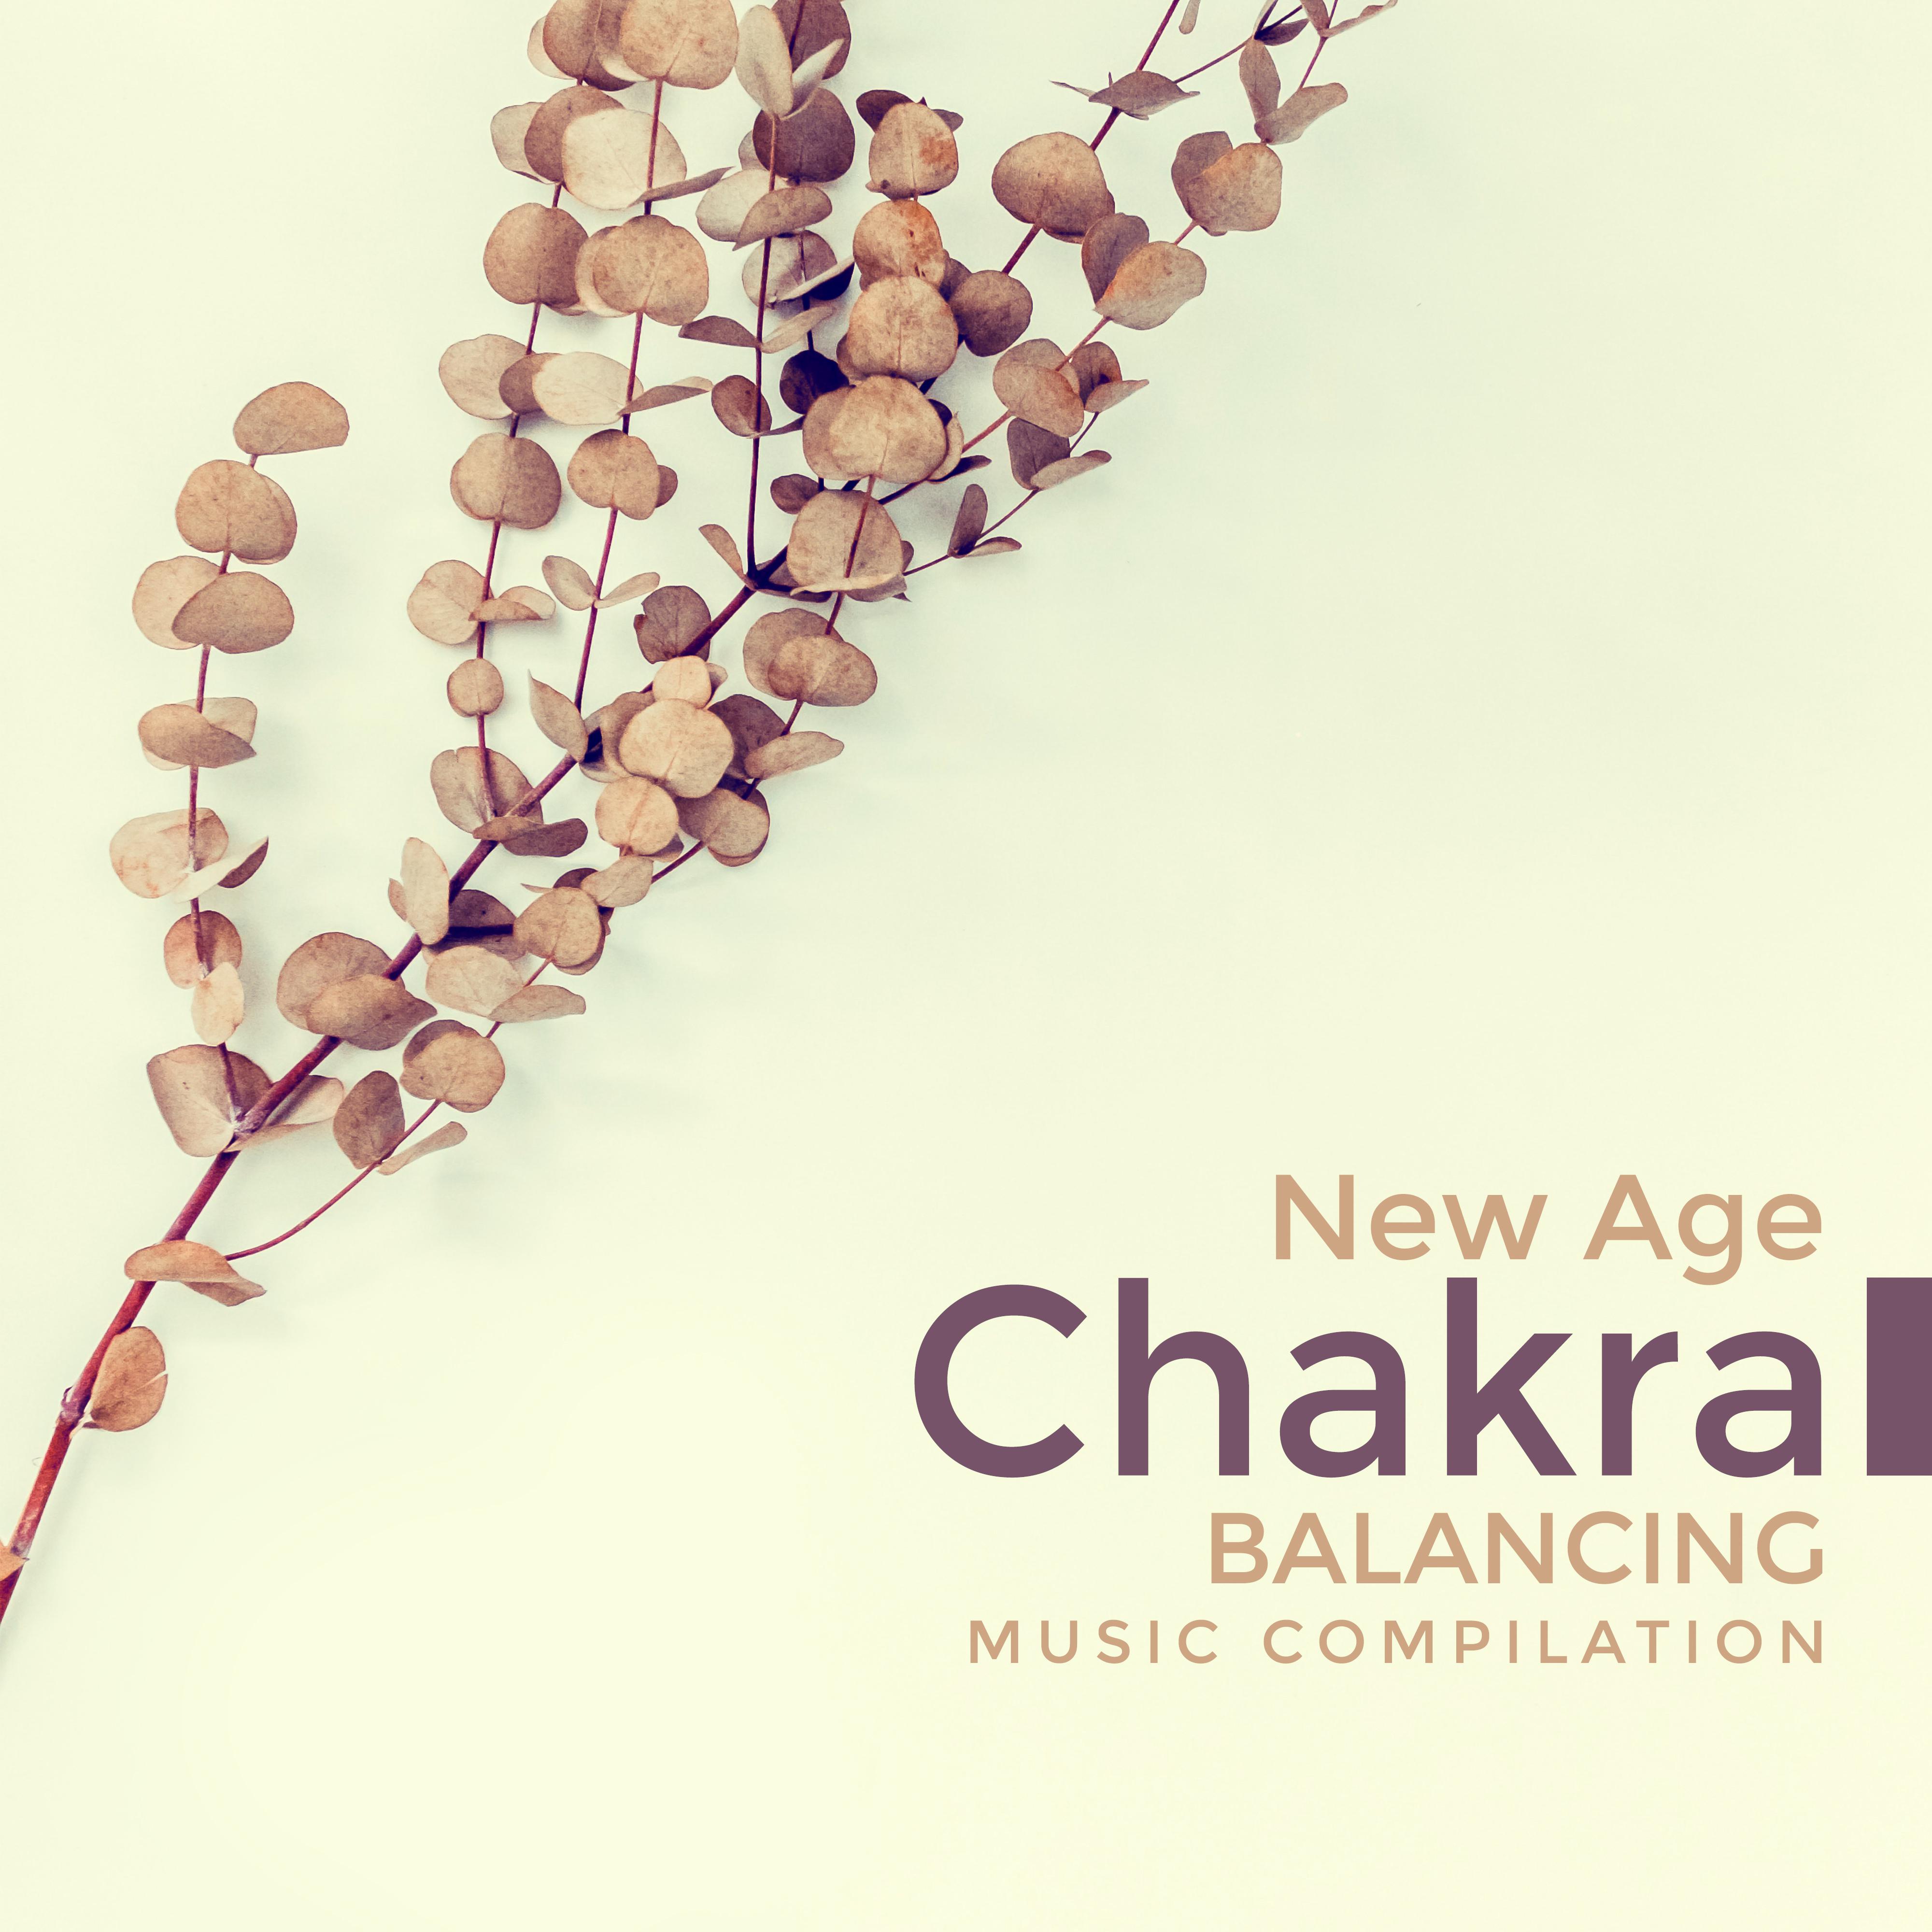 New Age Chakra Balancing Music Compilation